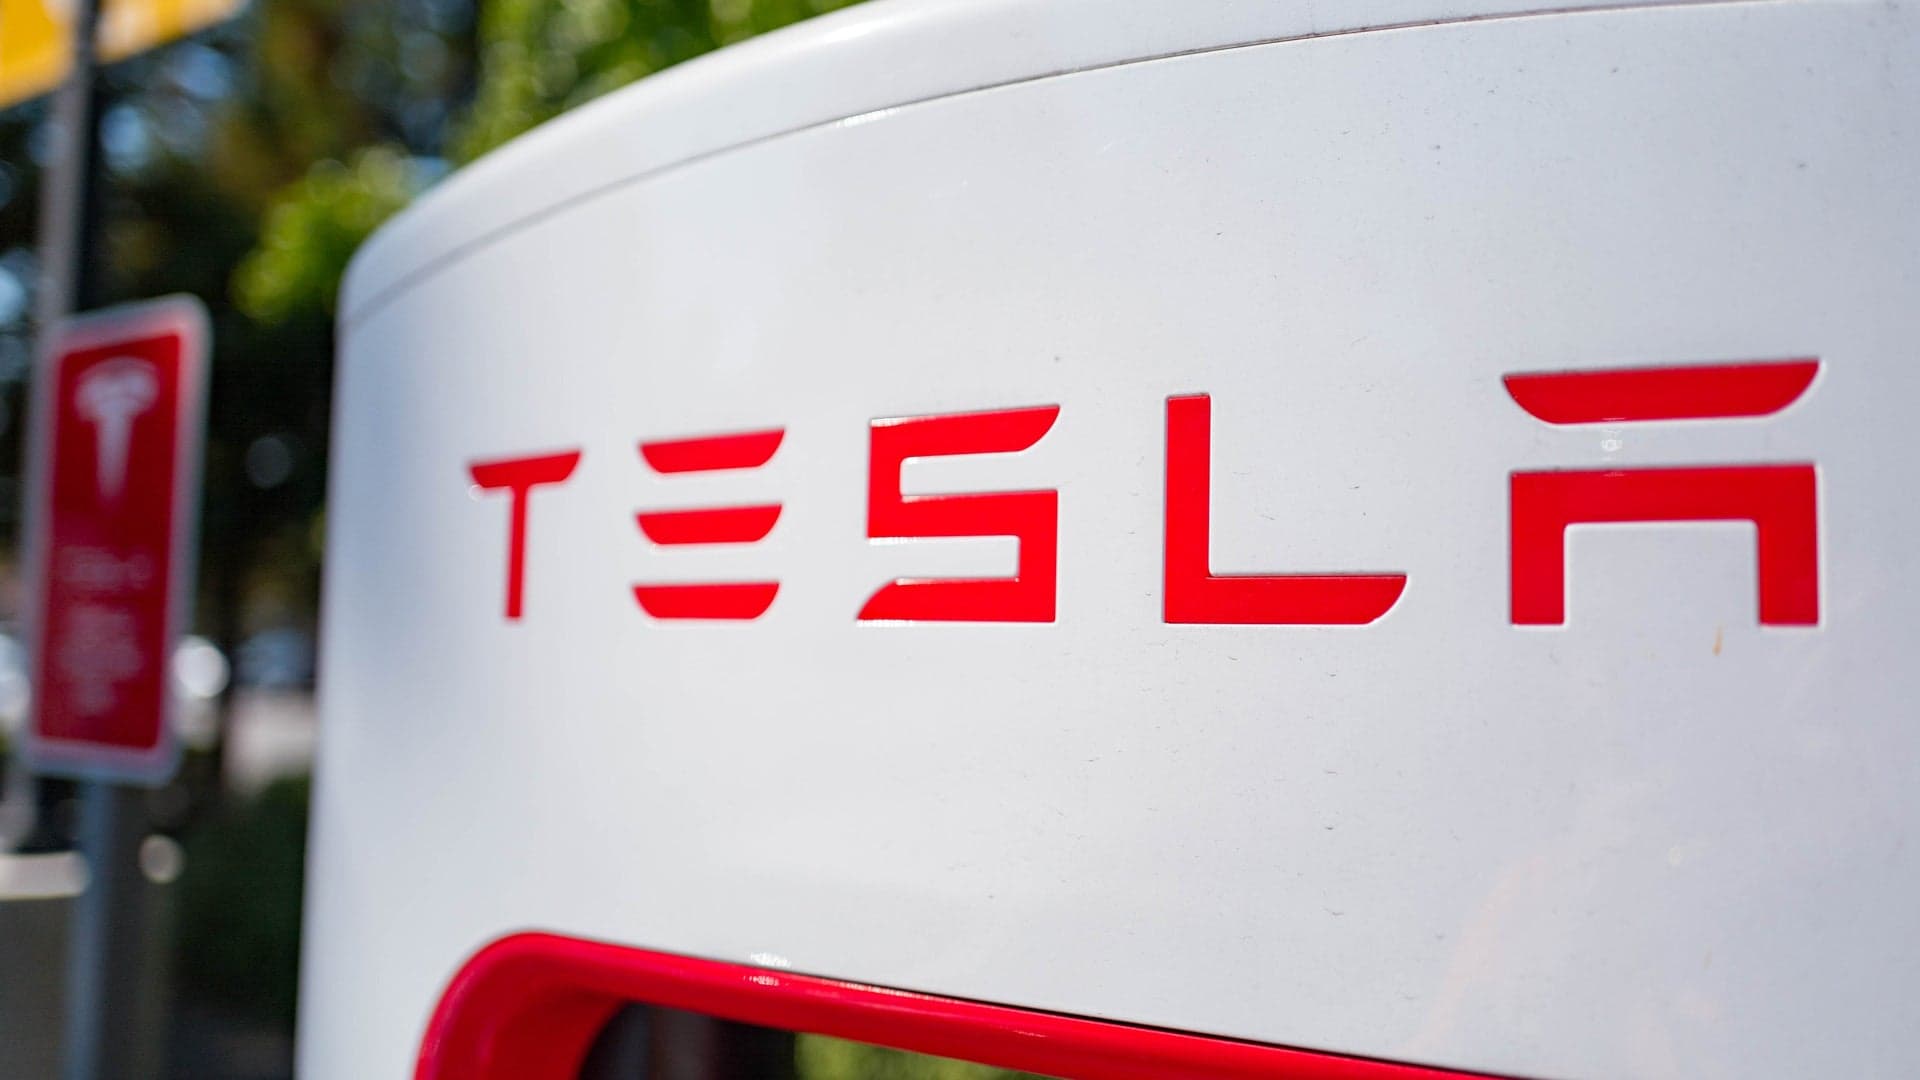 World’s Largest Tesla Supercharger Station Planned Halfway Between LA and San Francisco